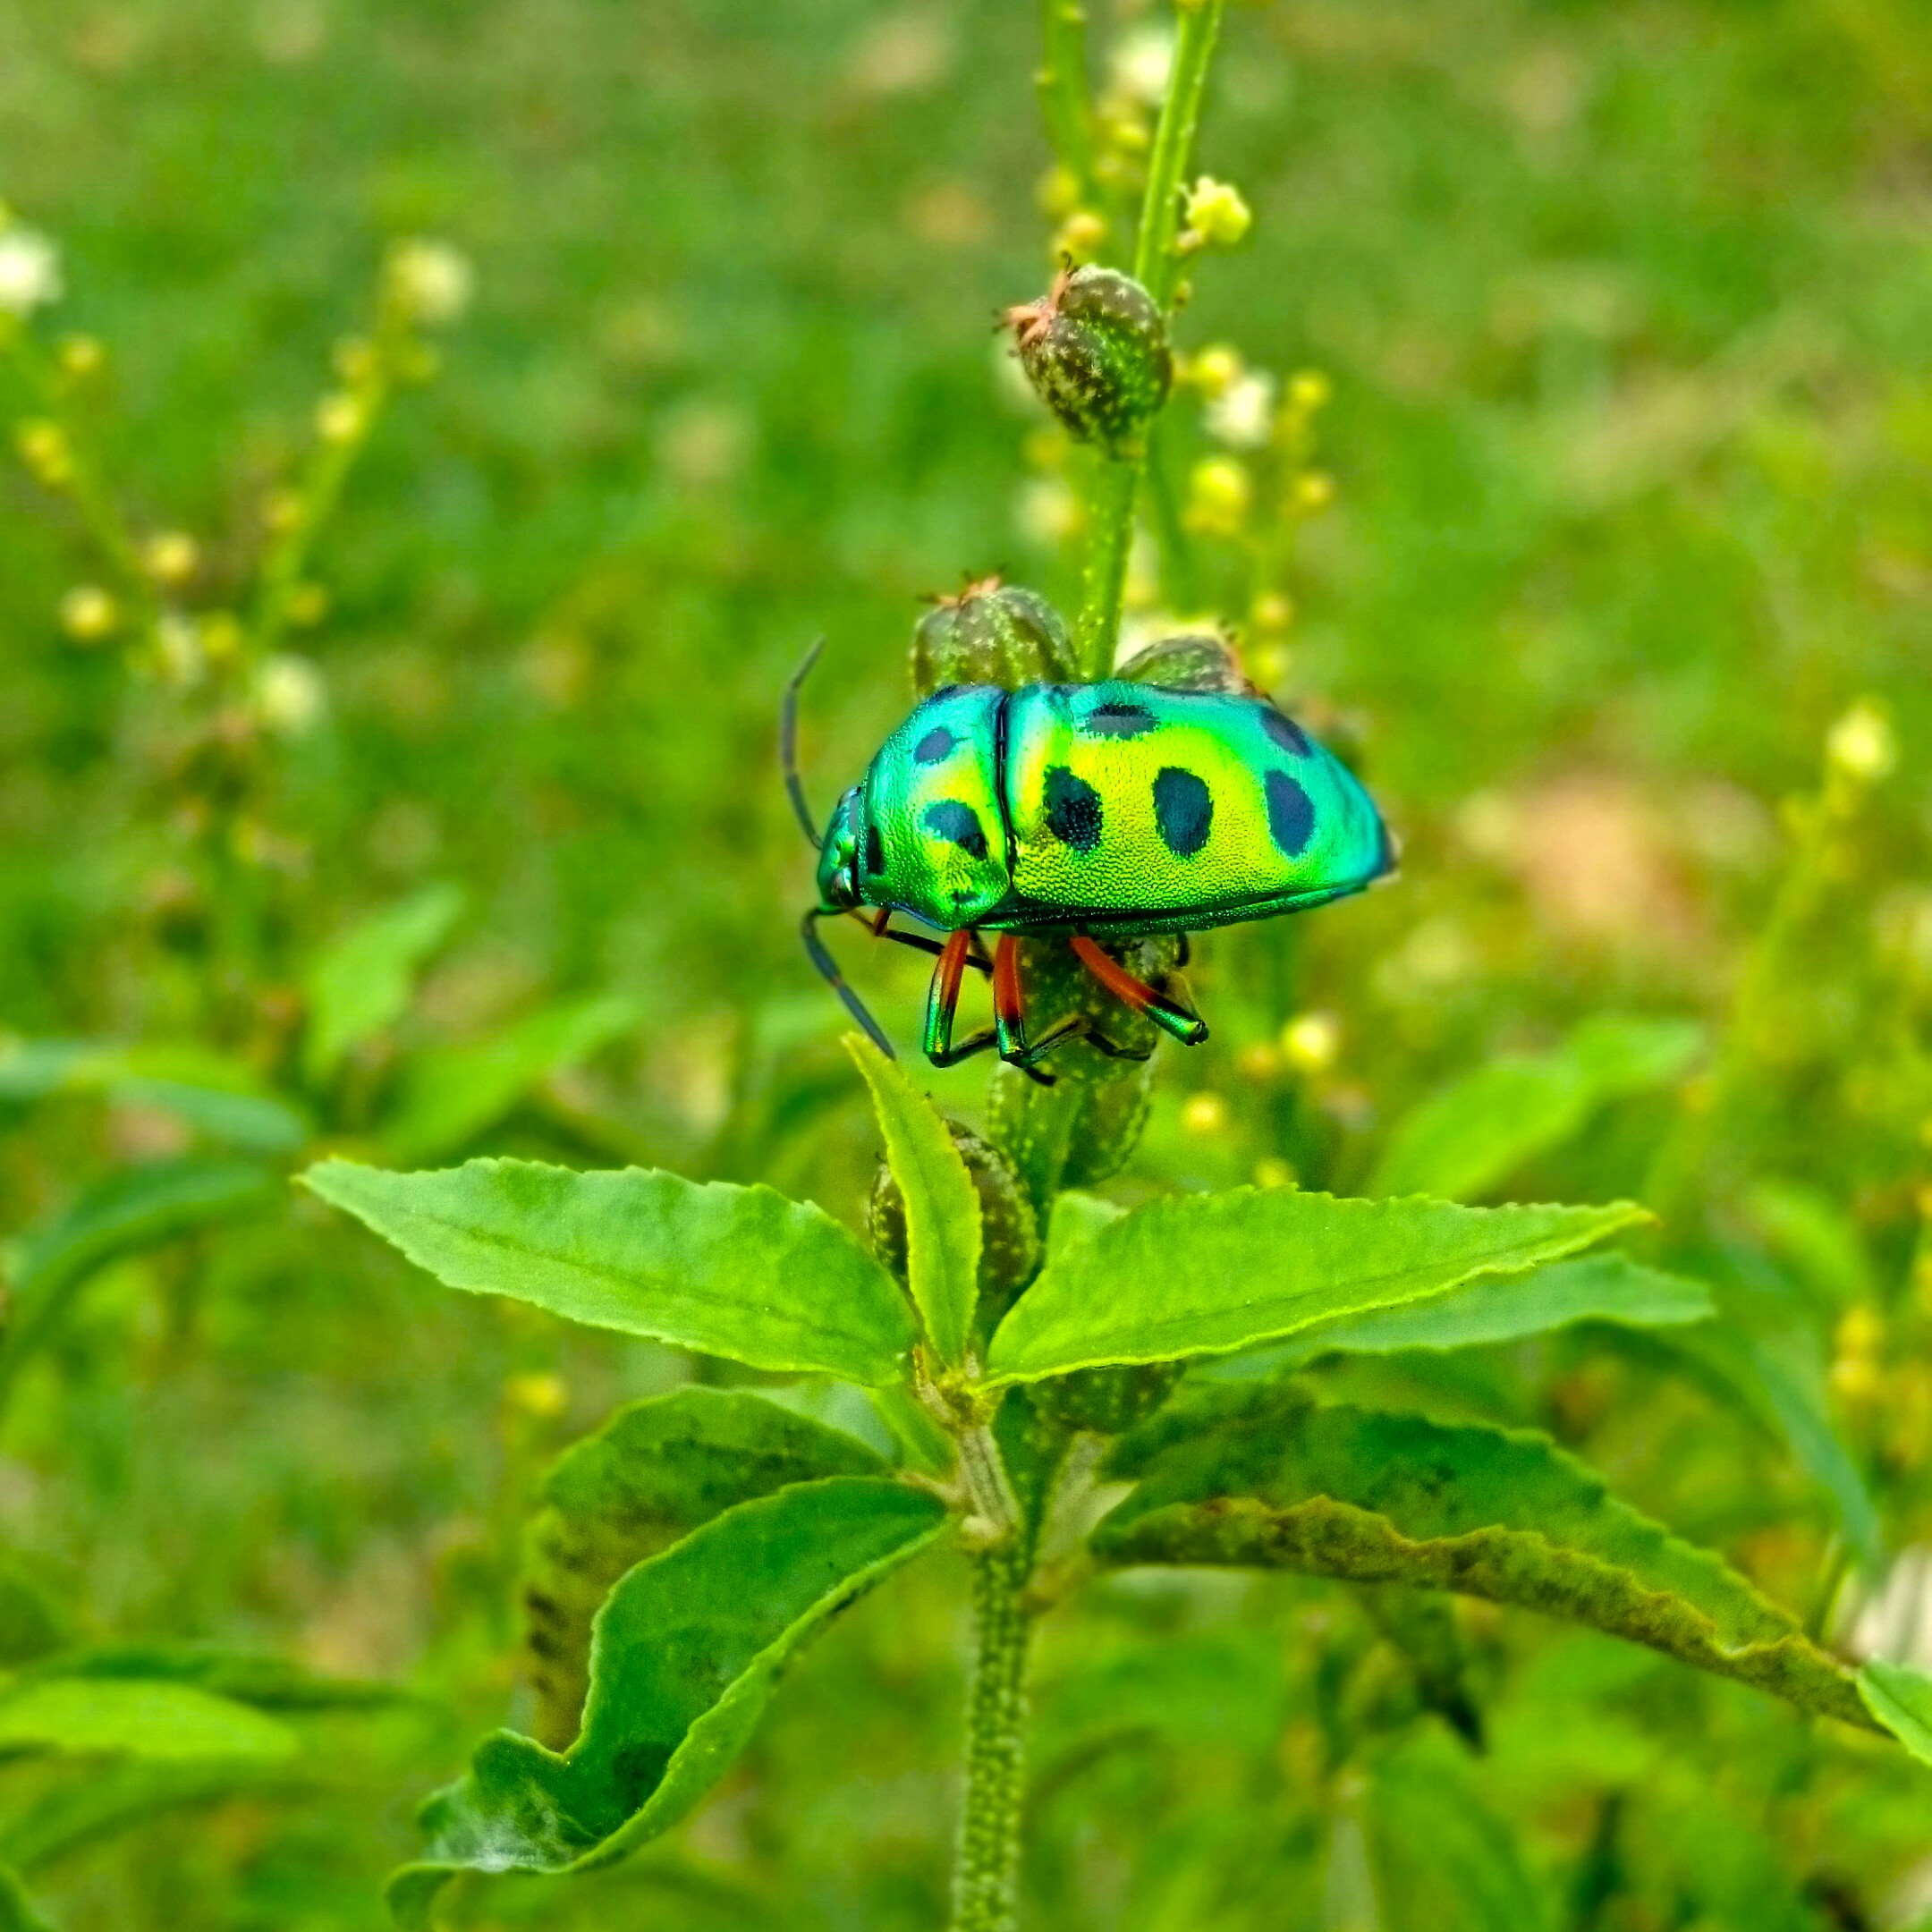 General 2160x2160 nature insect Sri Lanka animals plants